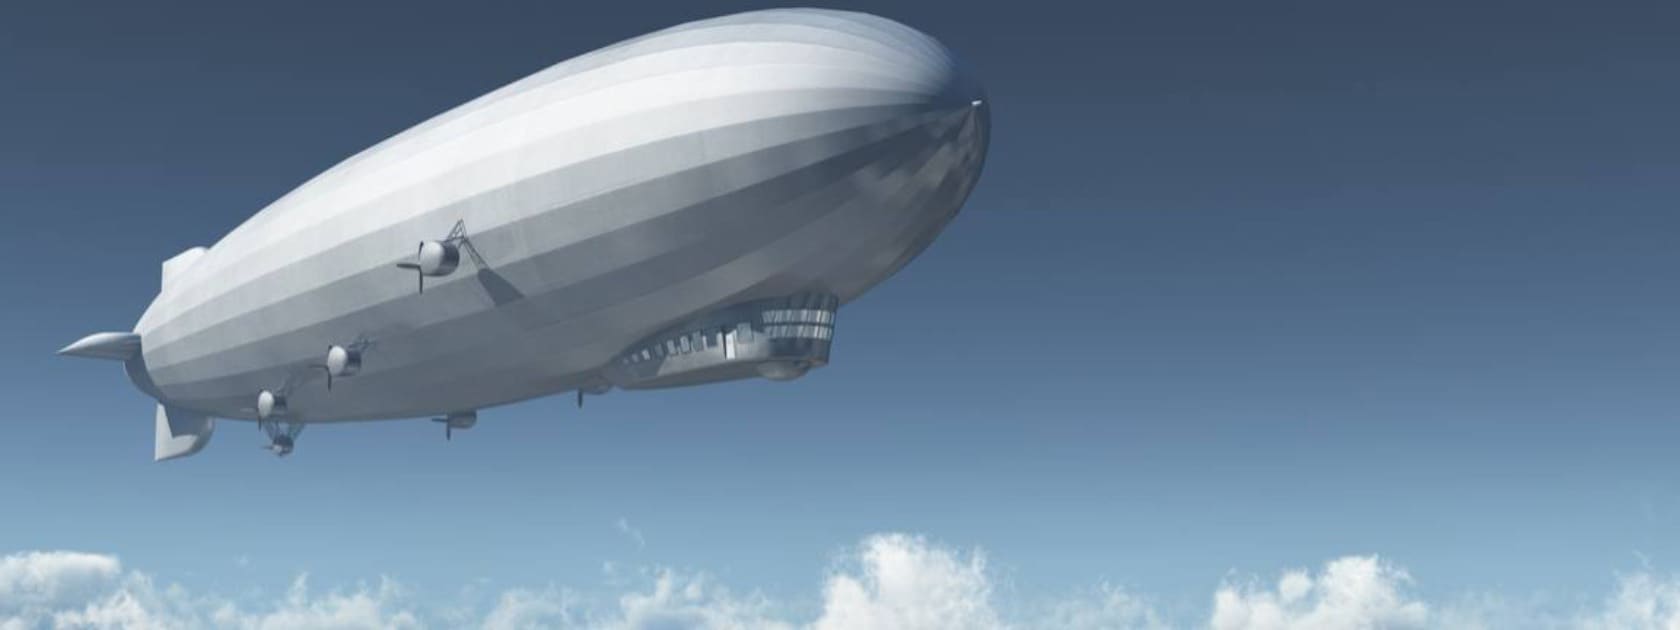 Hindenburg airship interior | Zeppelin airship, Hindenburg interior,  Hindenburg